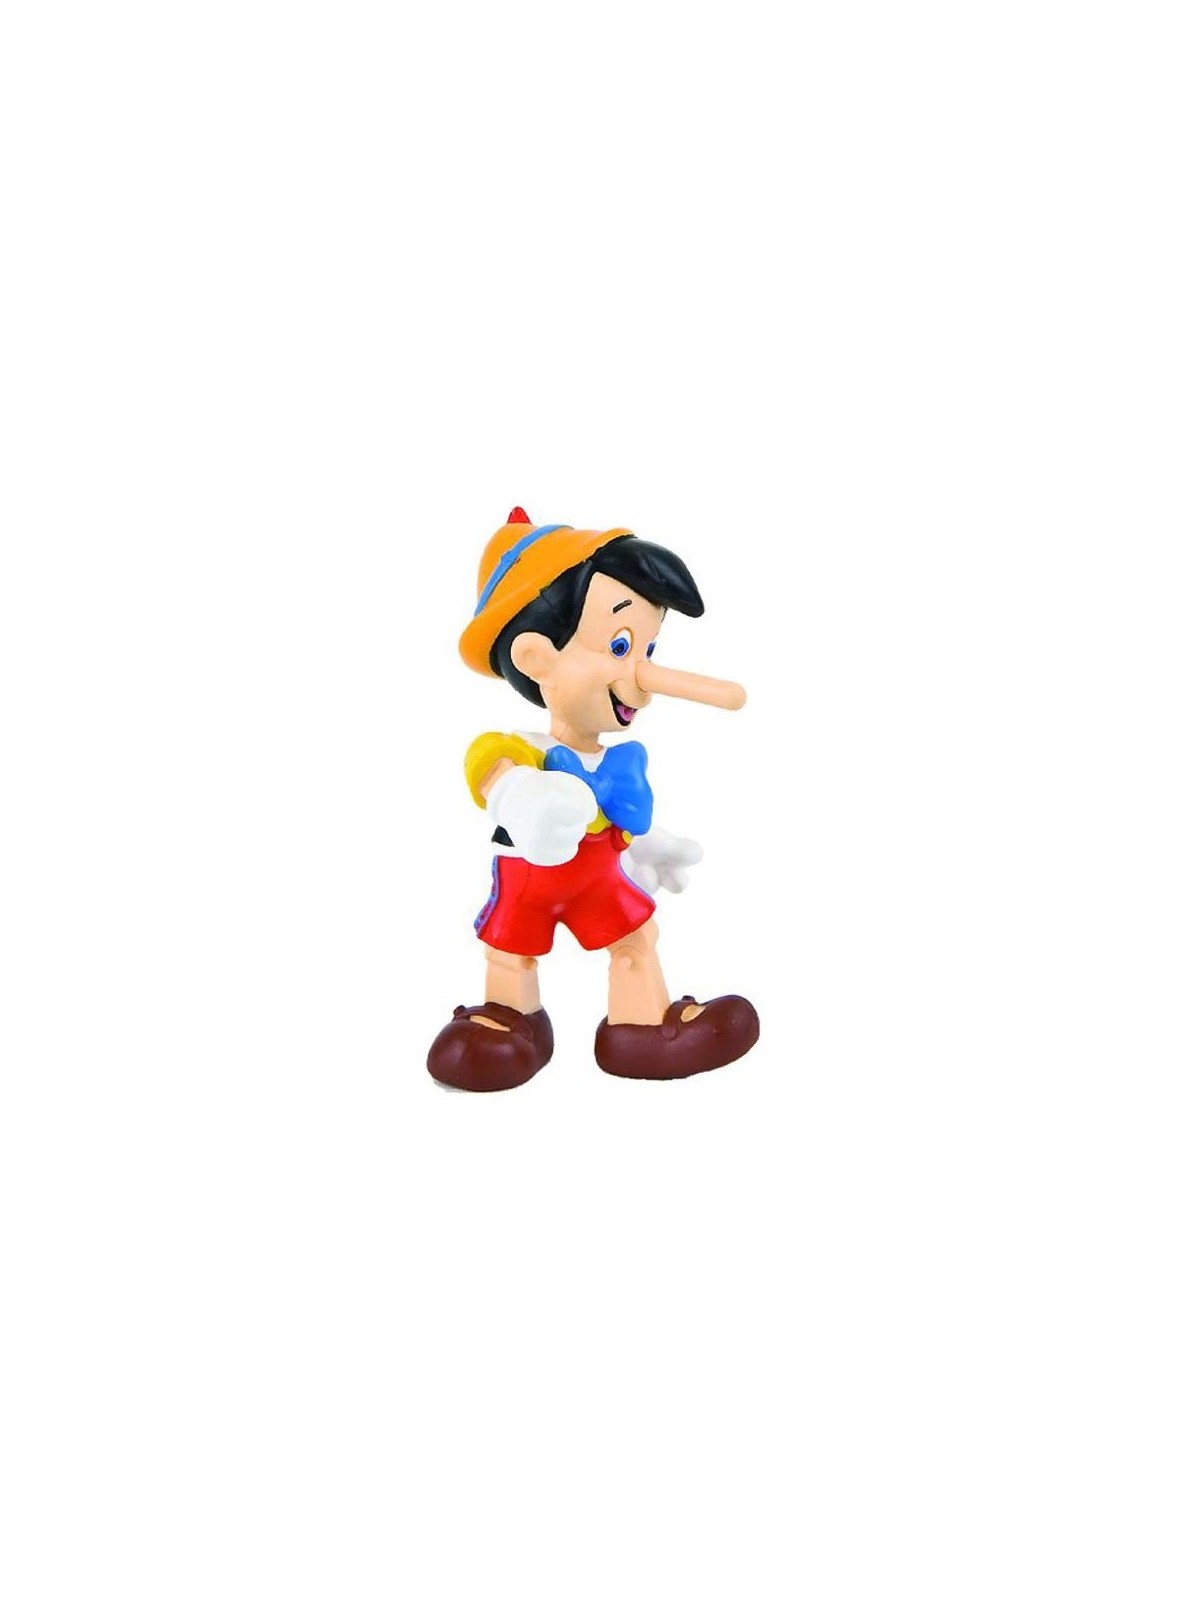 Disney Figure - Pinocchio